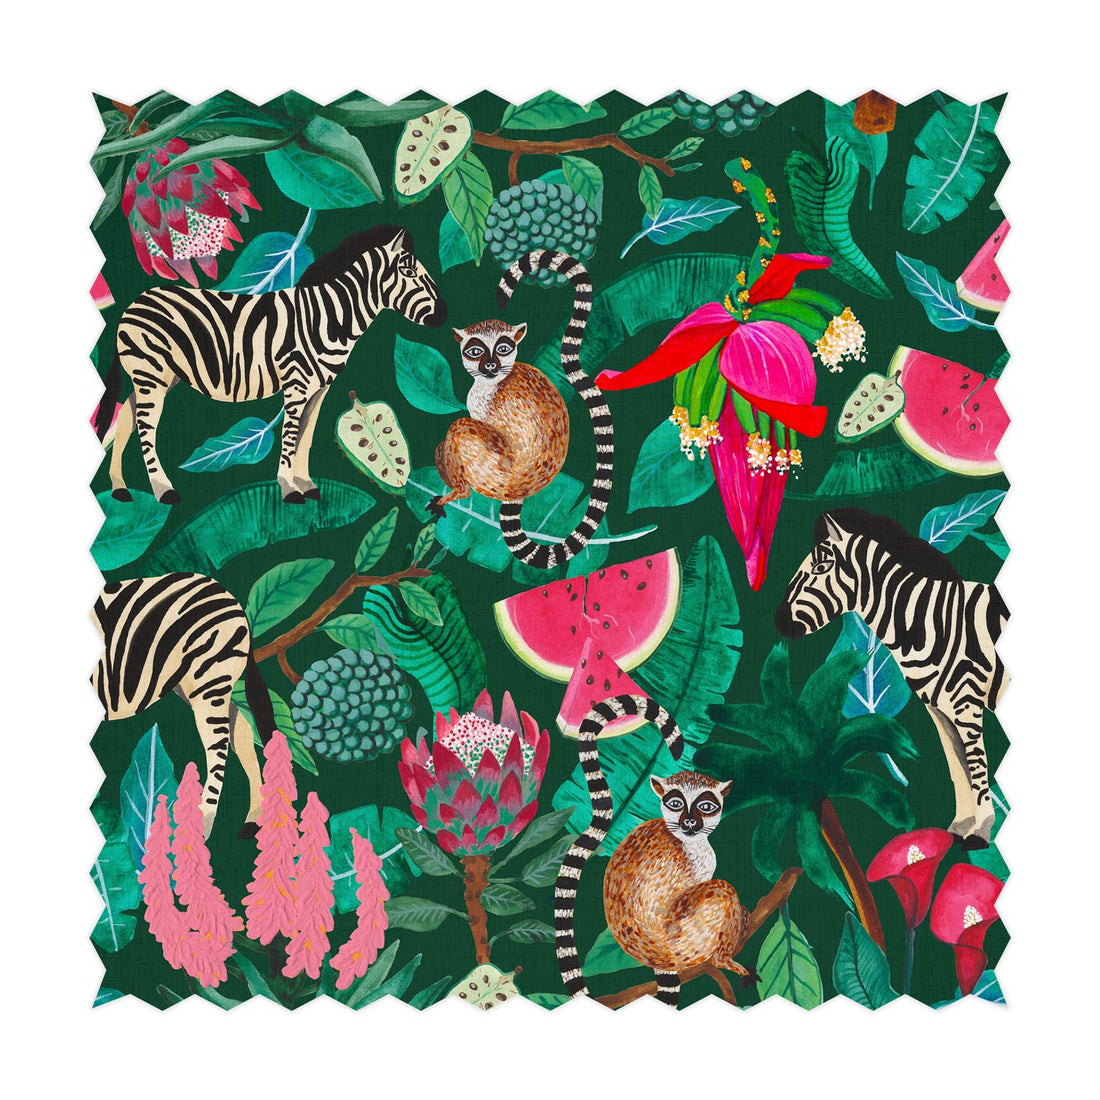 jungle theme printed fabric design with zebras